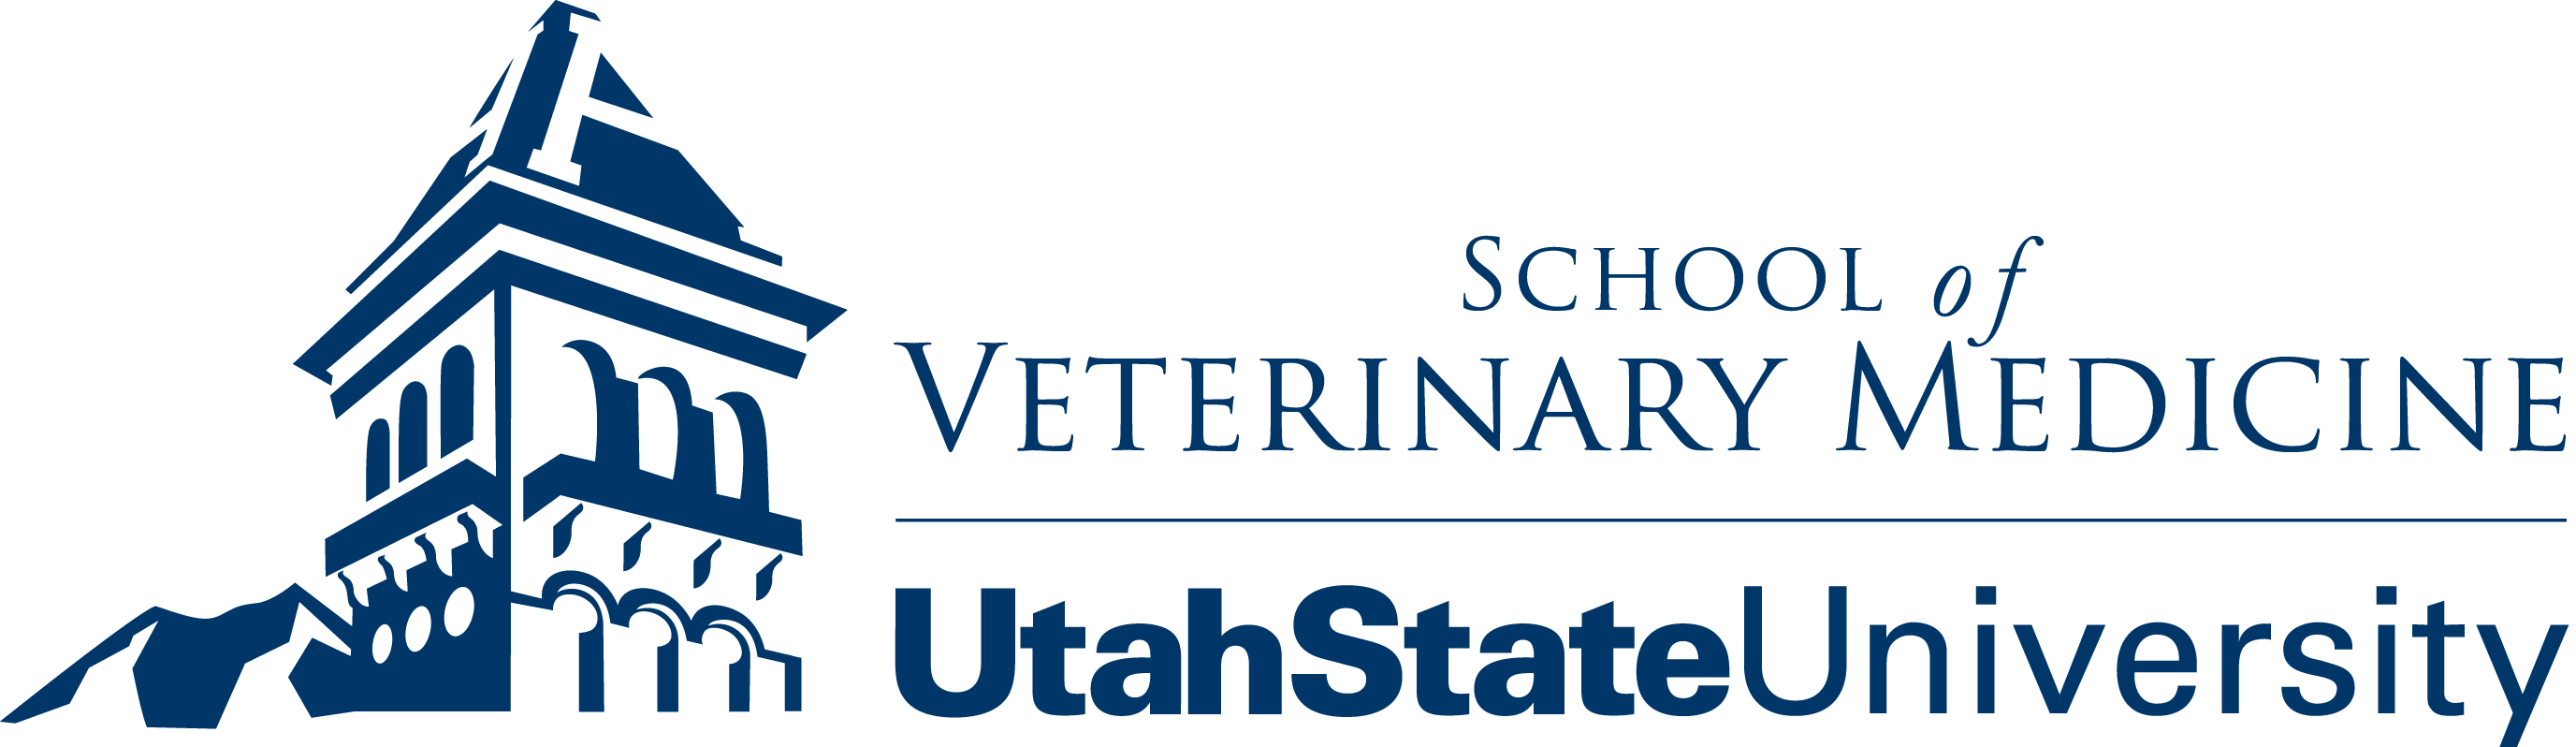 USU School of Veterinary Medicine